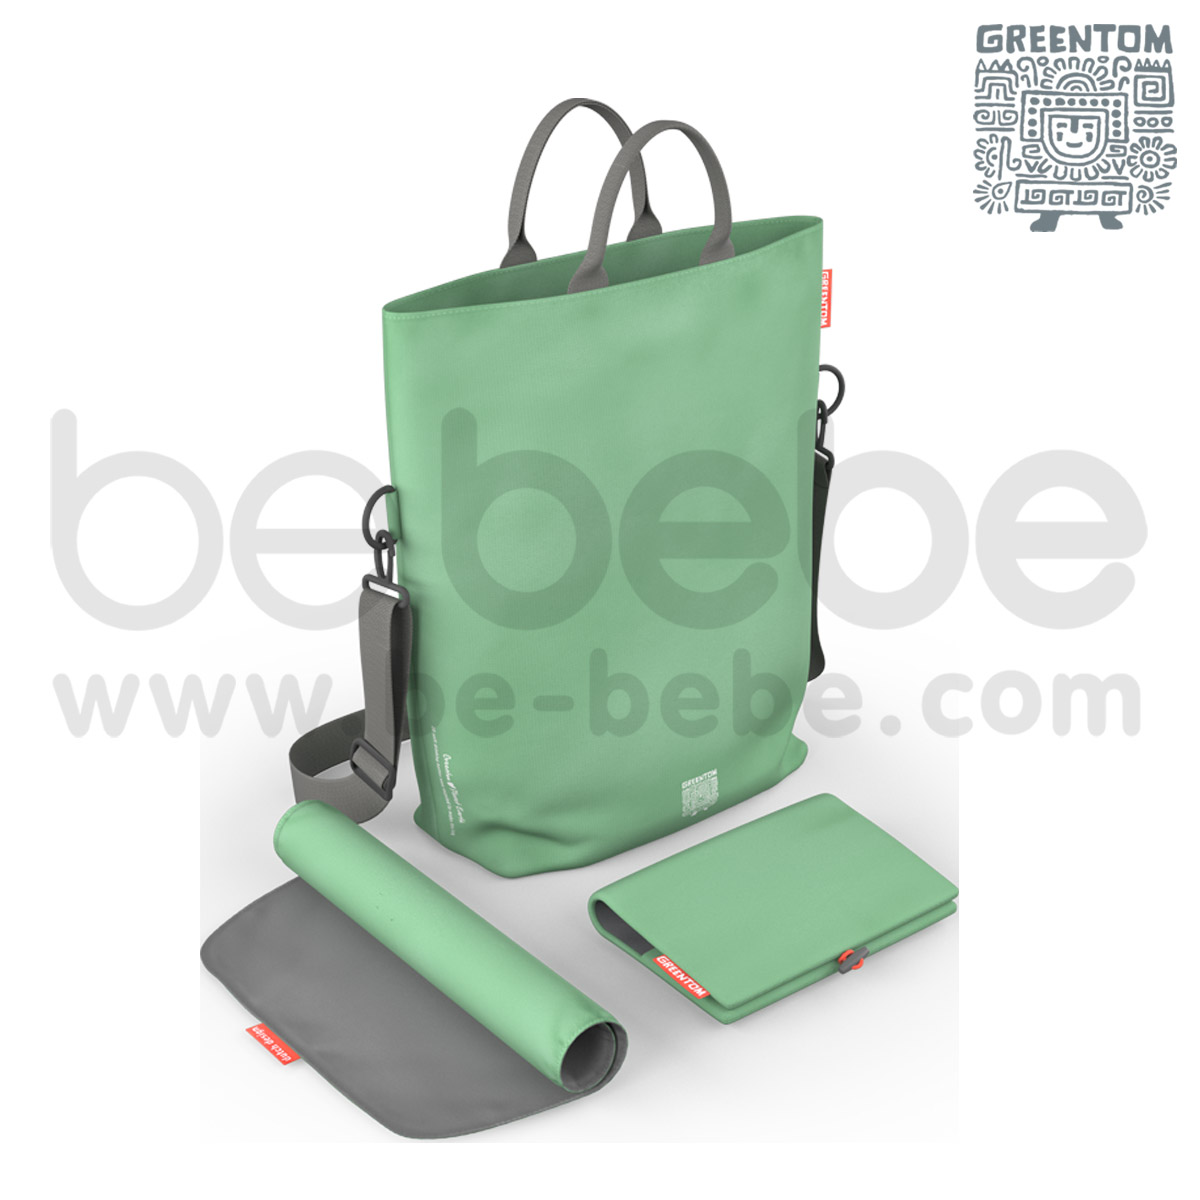 Greentom : Diaper Bag / Mint